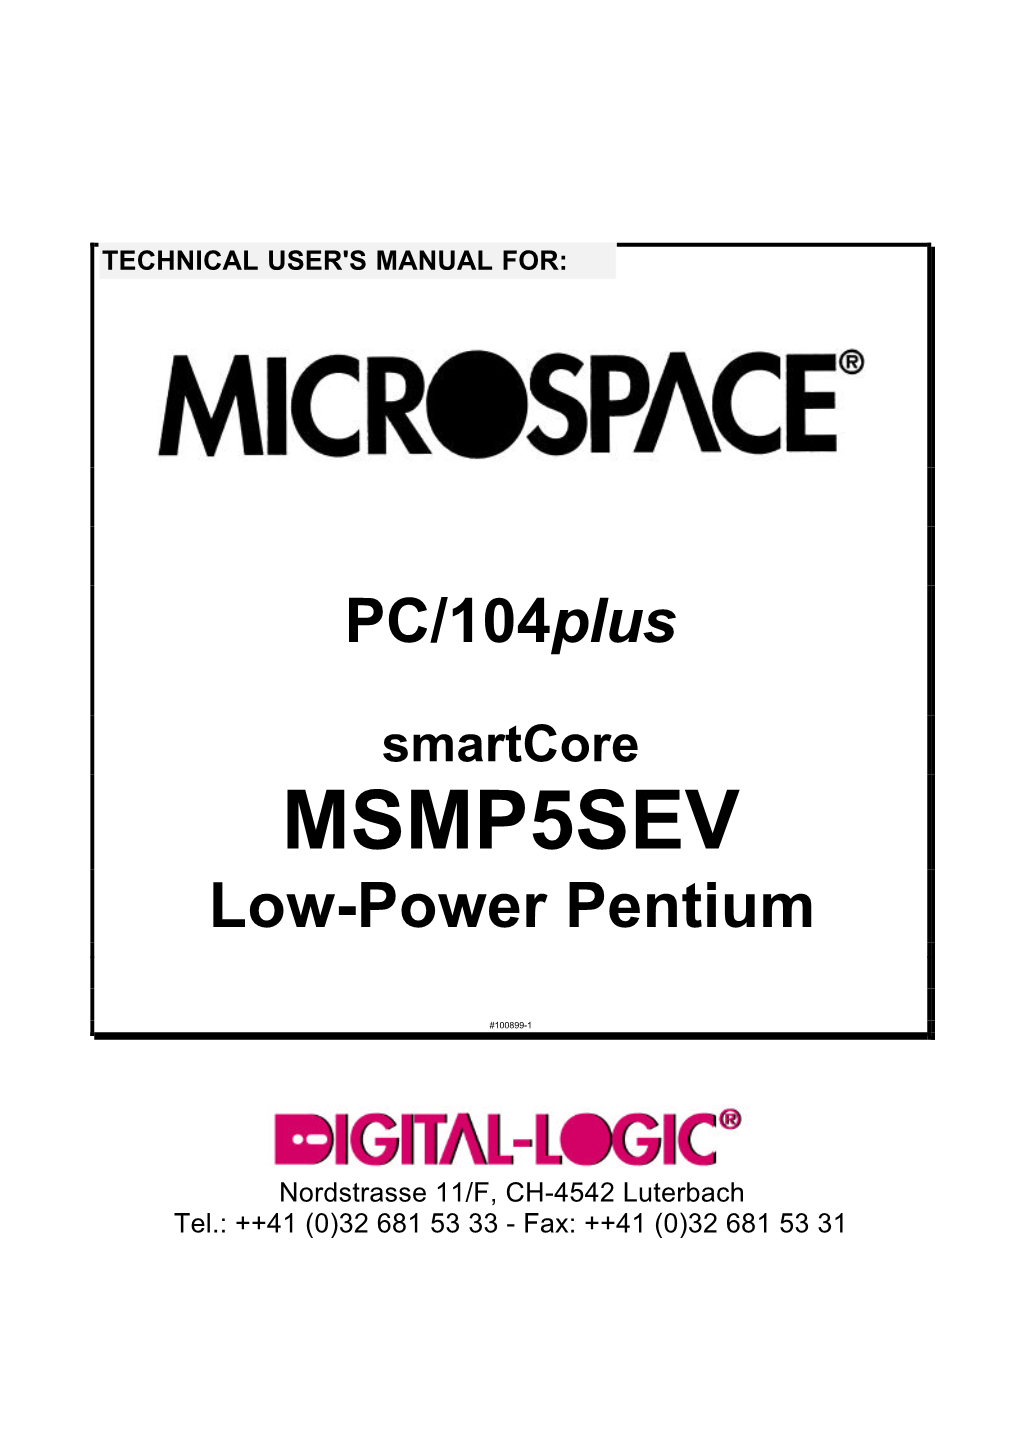 MSMP5SEV Low-Power Pentium